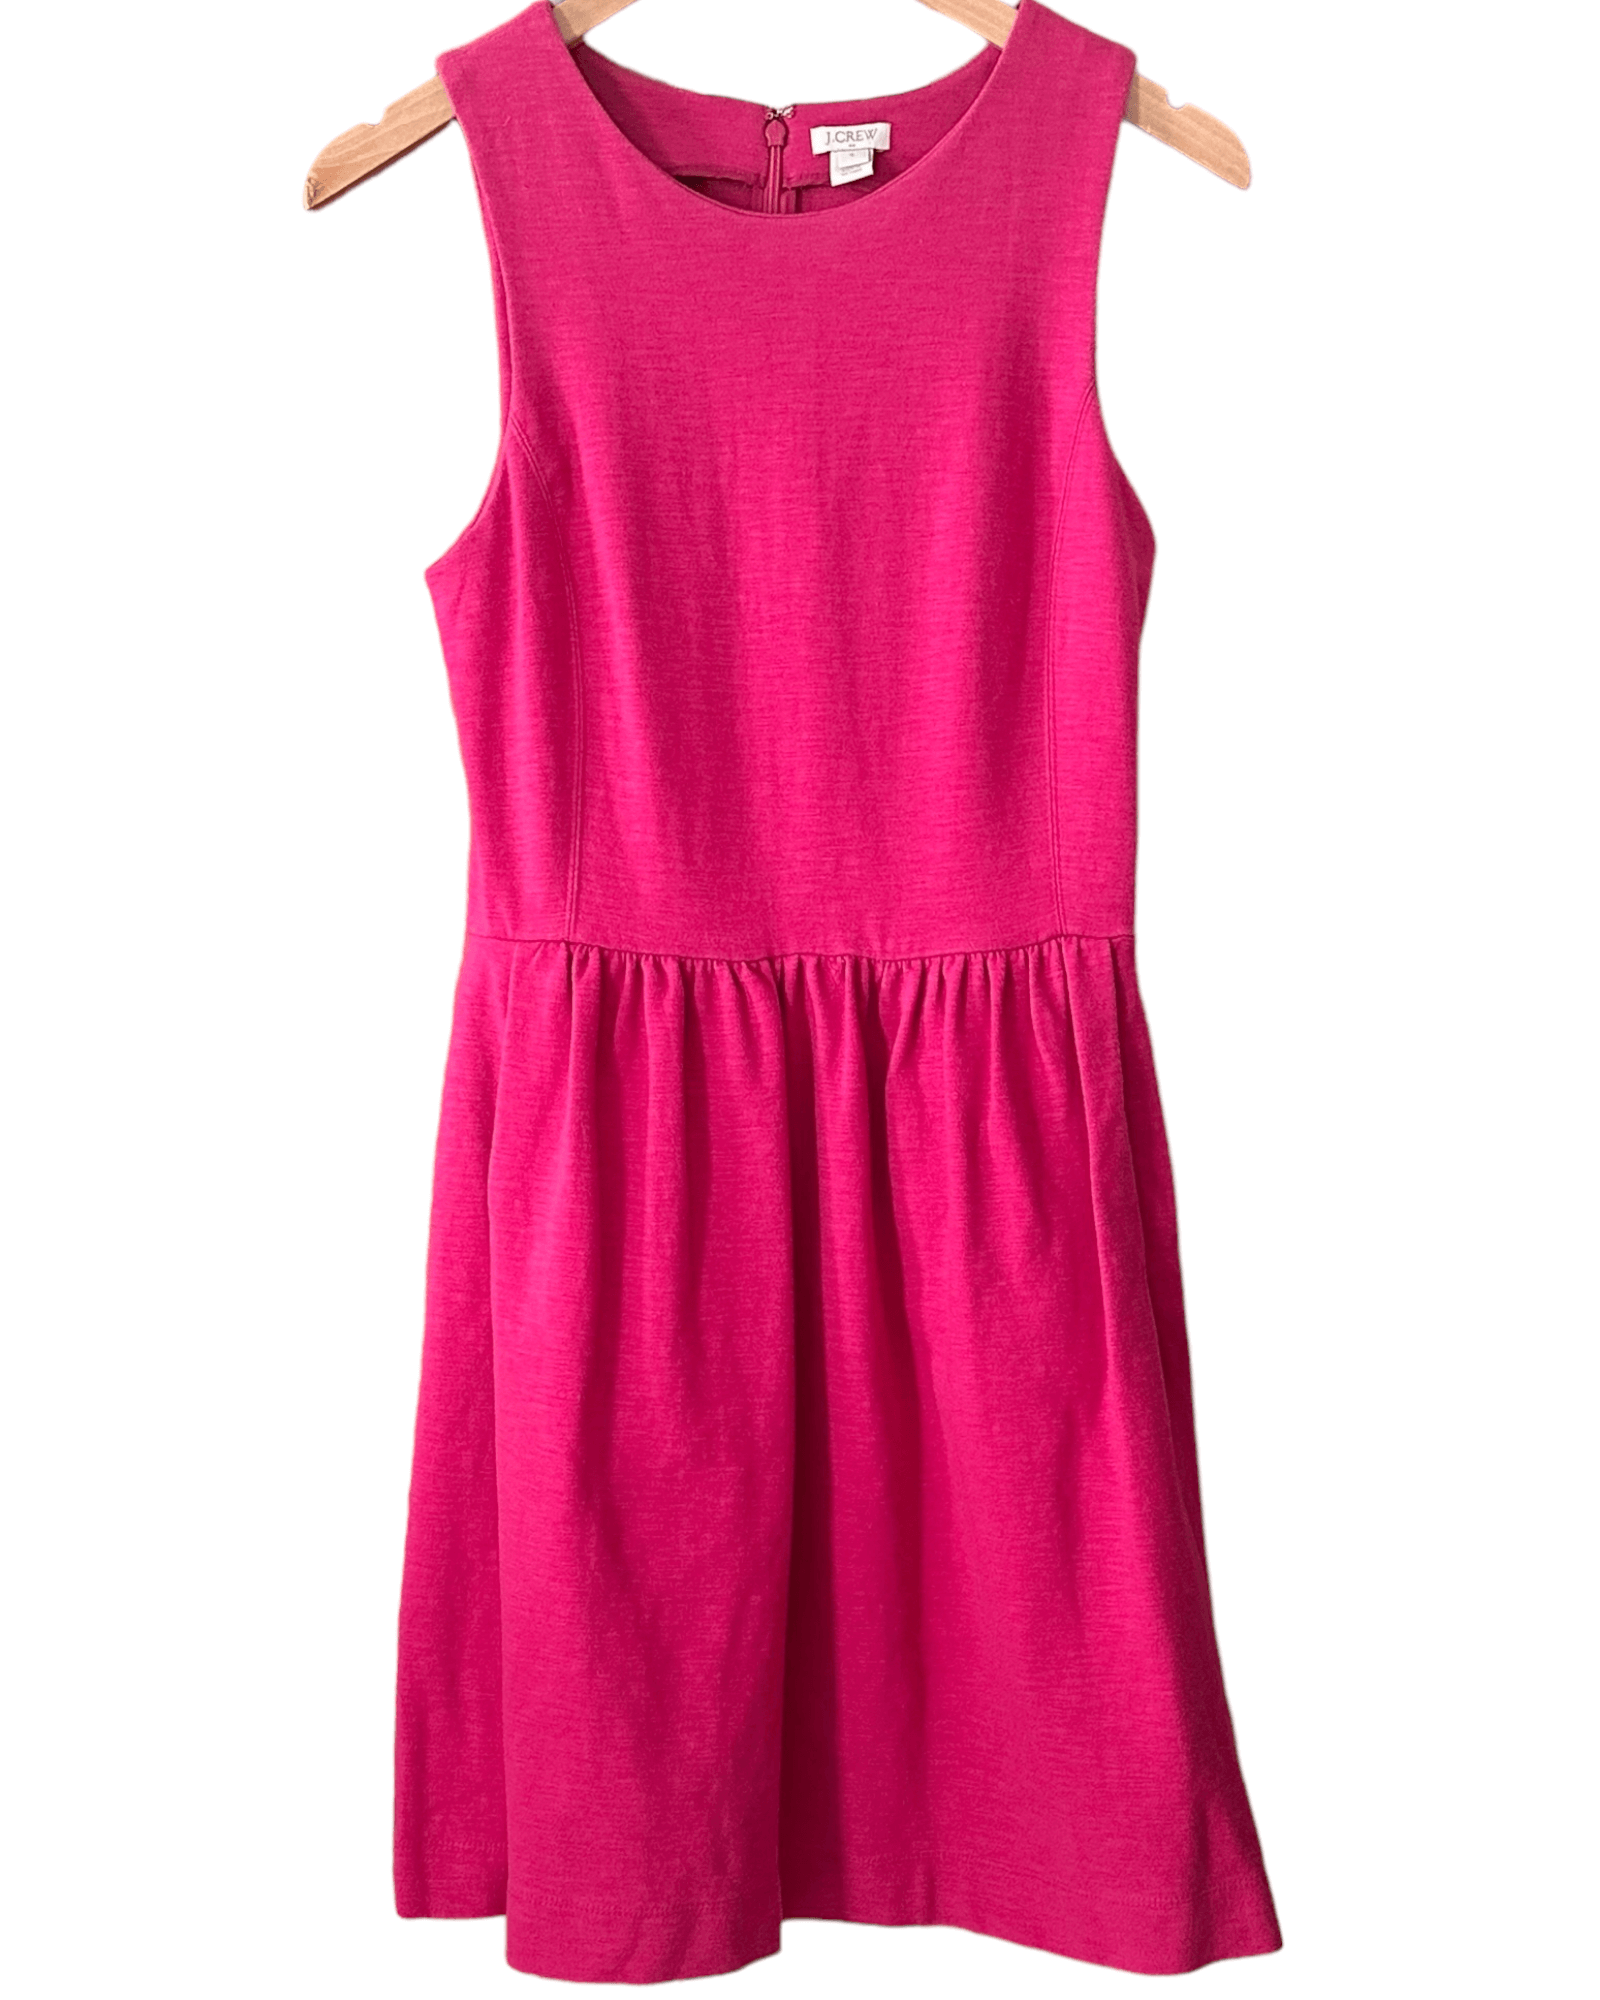 Cool Winter J.CREW loganberry pink sleeveless dress